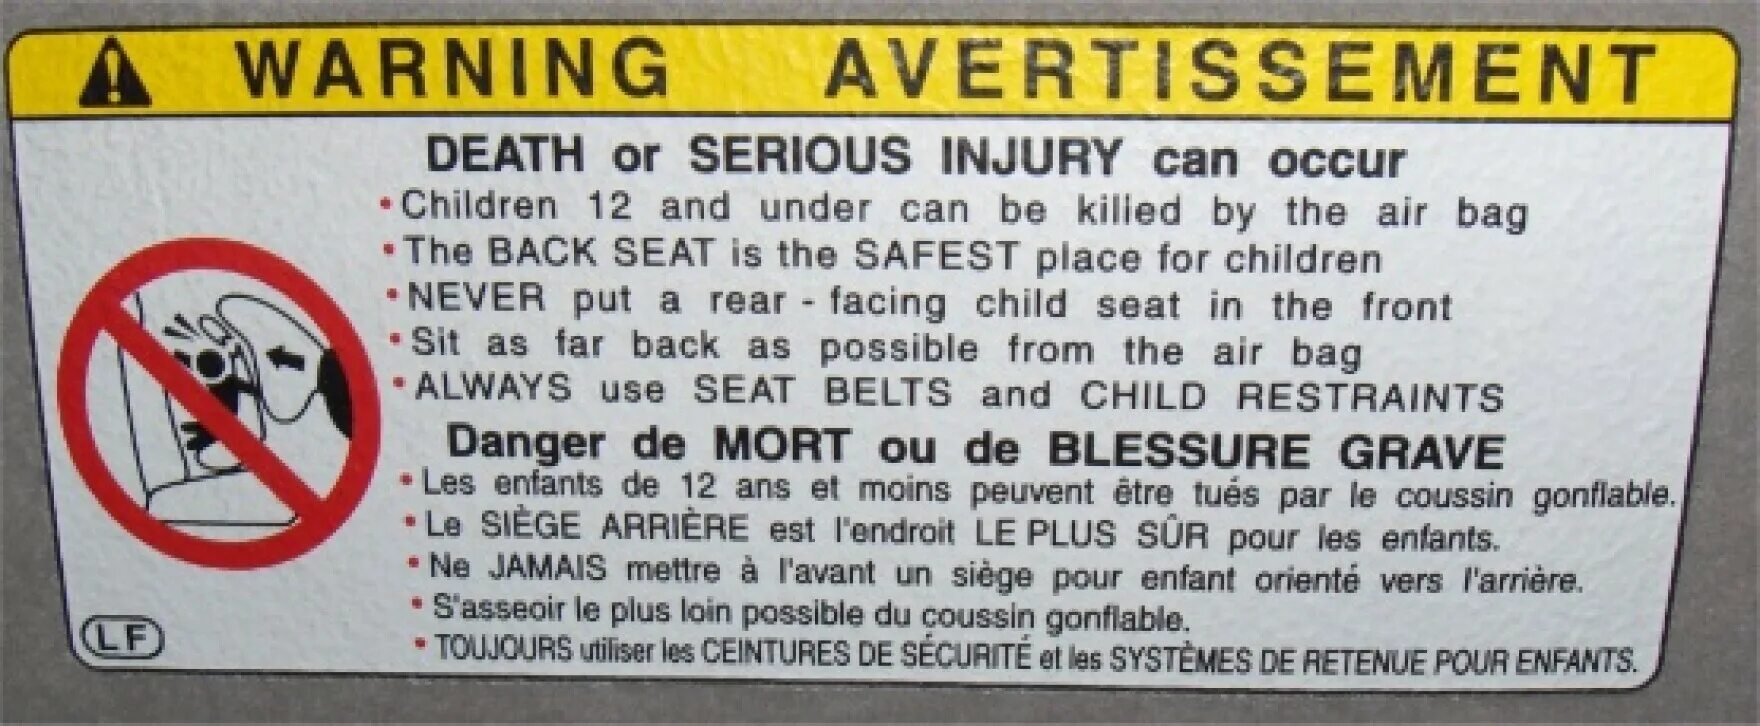 Warning airbag наклейка. Avertissement. Warning avertissement advertencia стикер. Блок Caution avertissement.